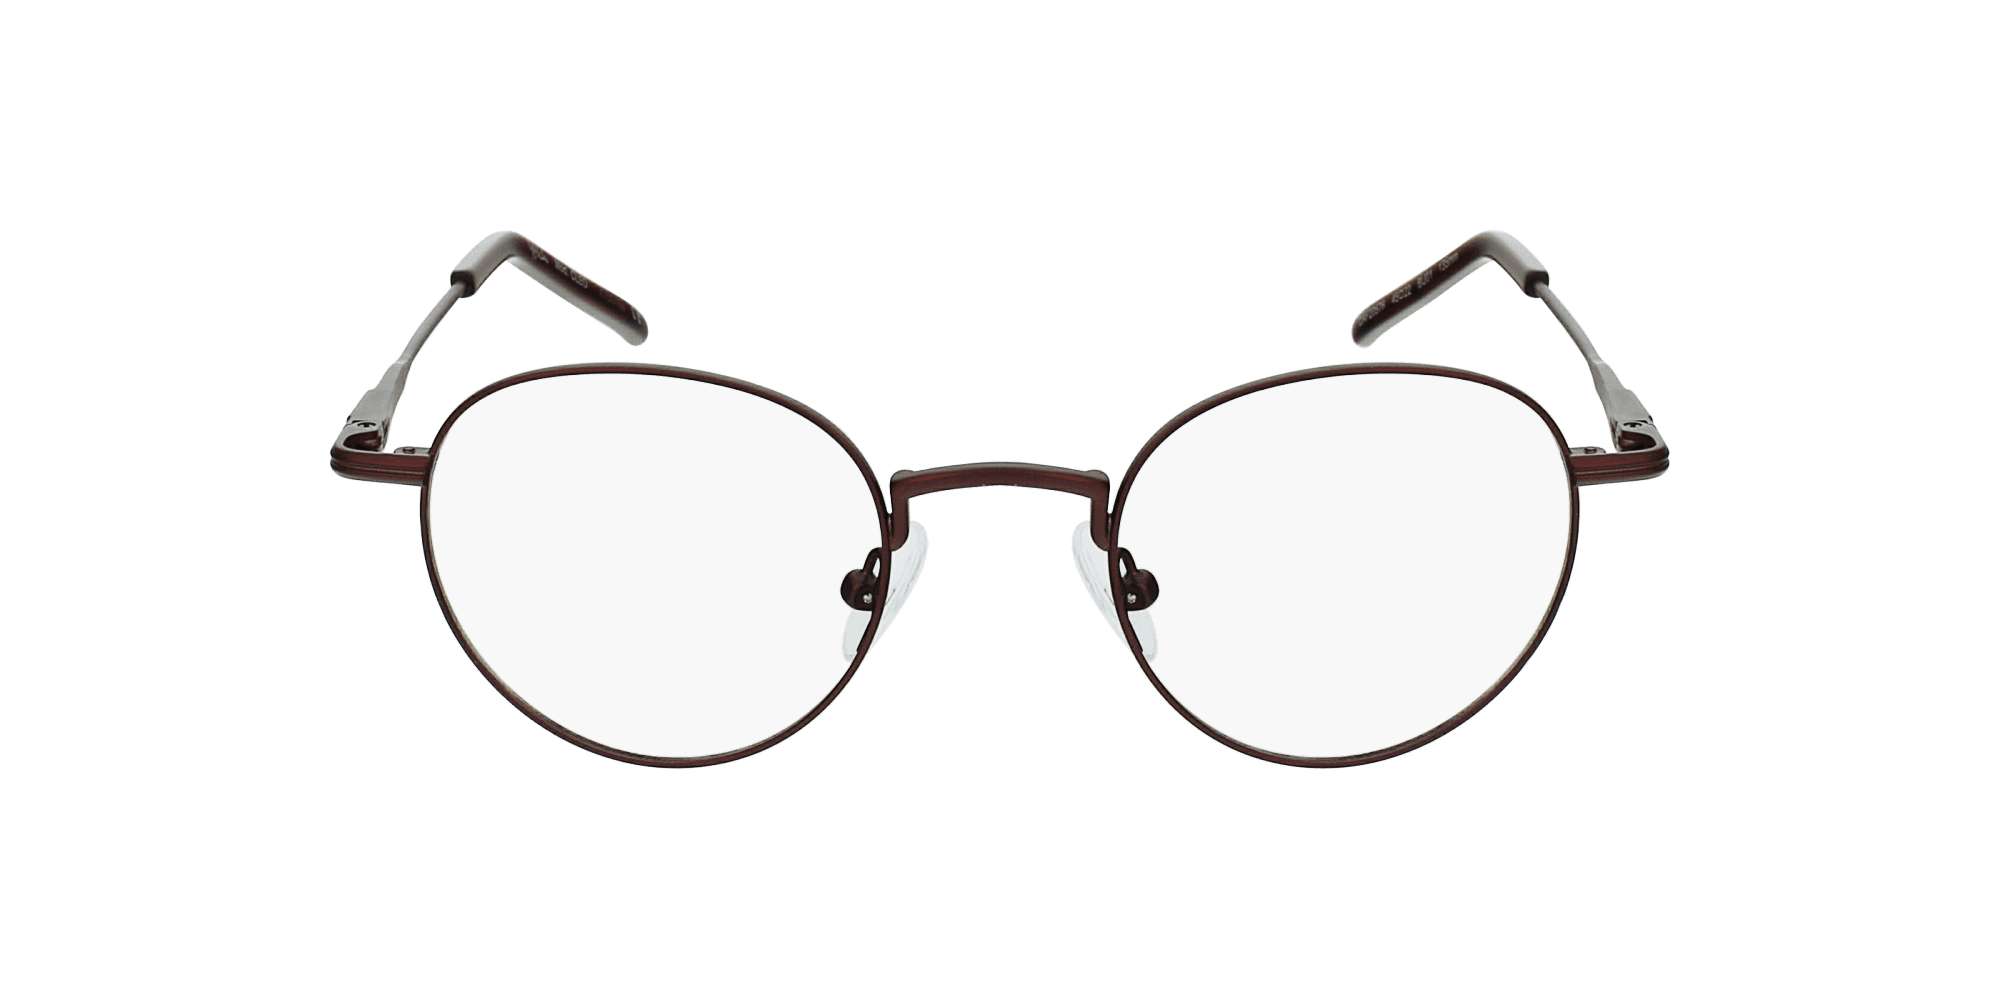 Los mejores de gafas de vista | Alain Afflelou